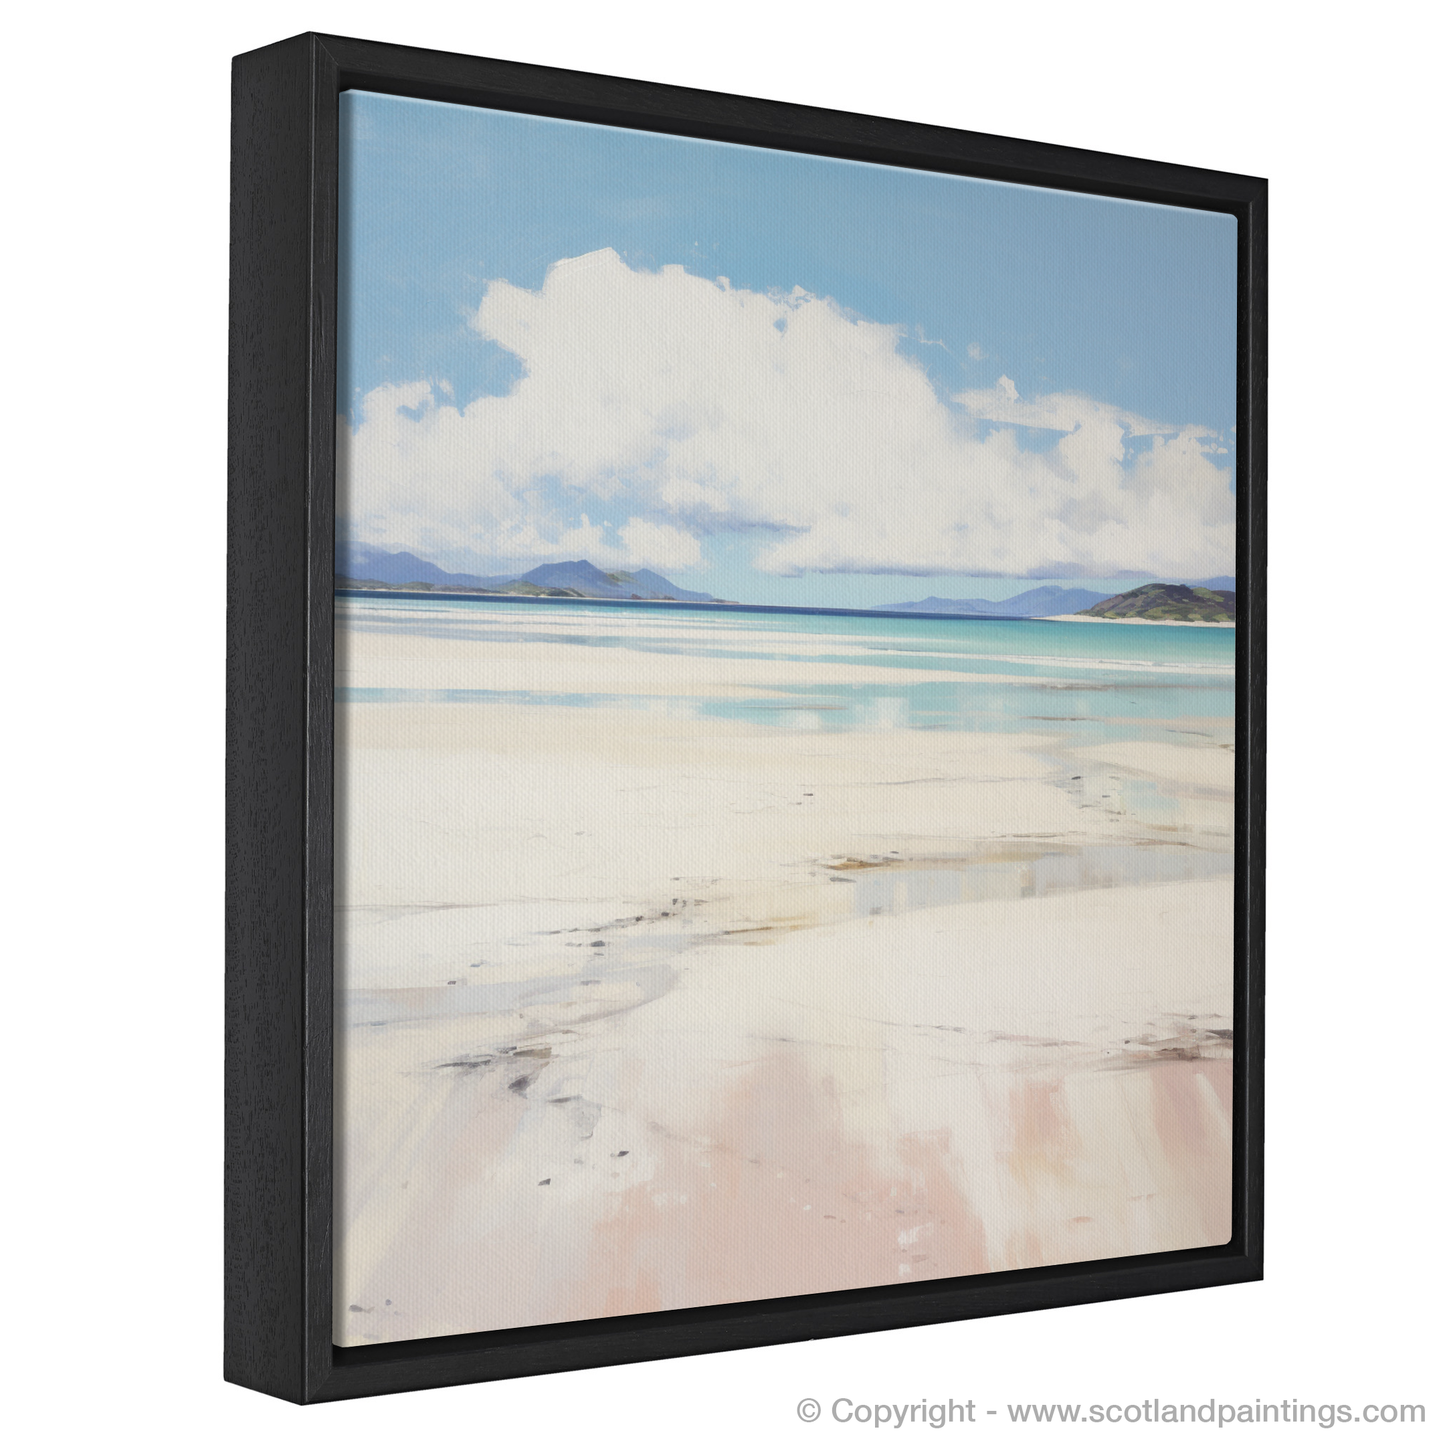 Painting and Art Print of Camusdarach Beach, Arisaig entitled "Minimalist Majesty of Camusdarach Beach".